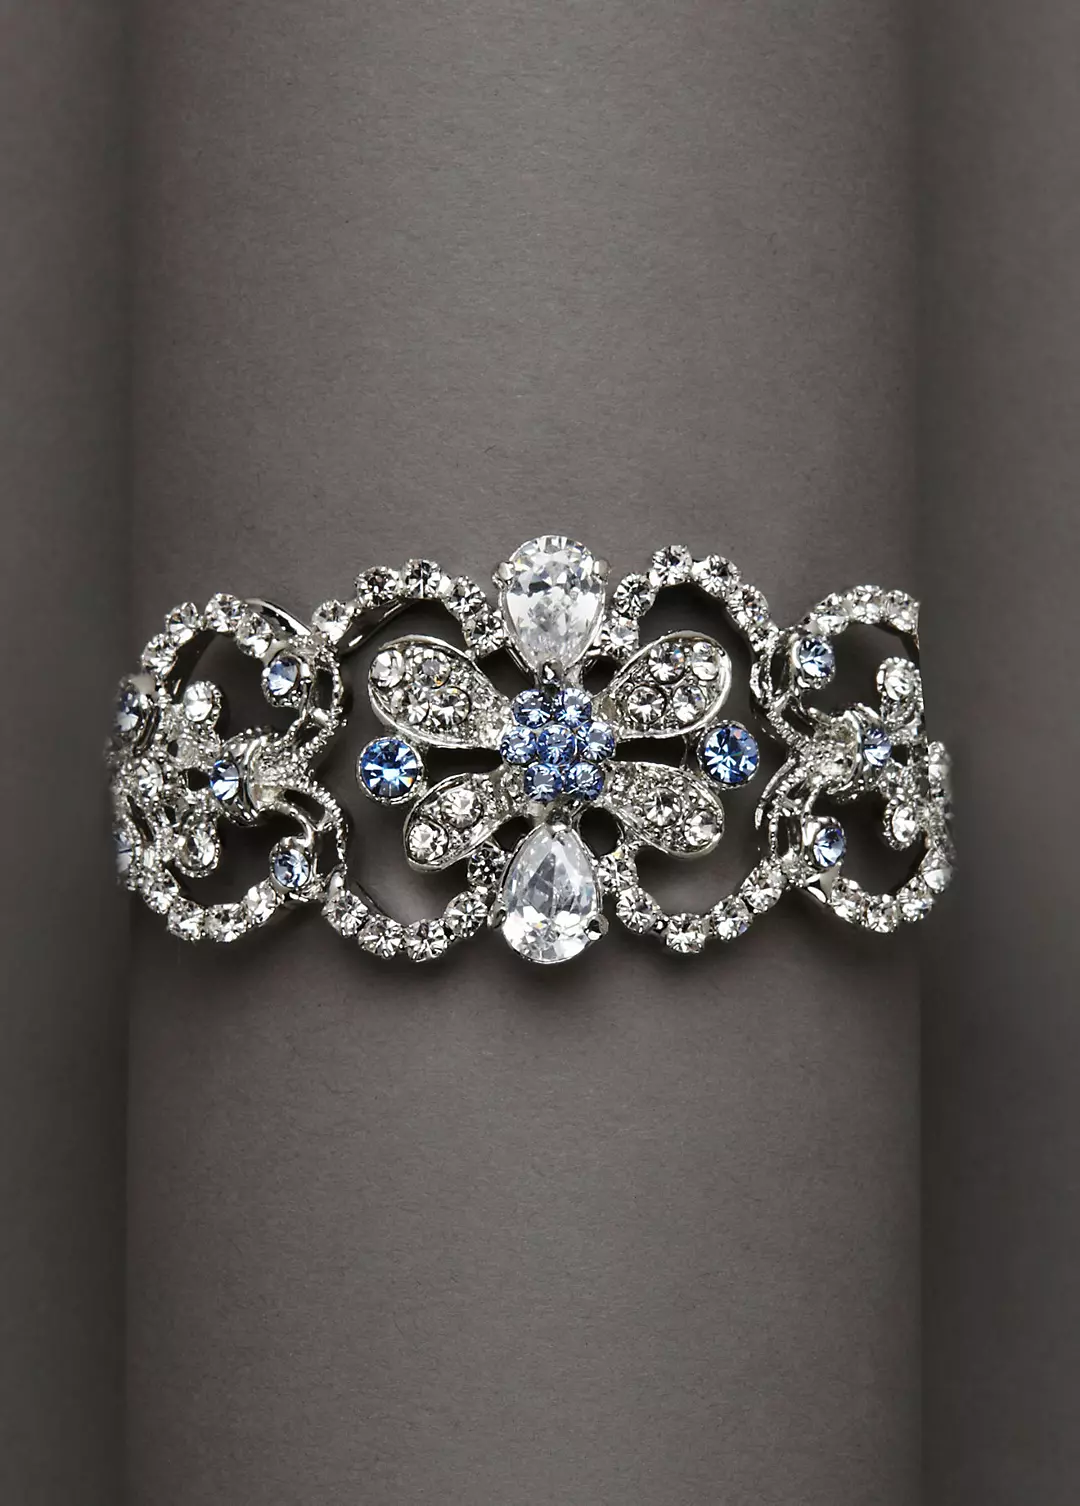 Blue and Silver Rhinestone Cuff Bracelet Image